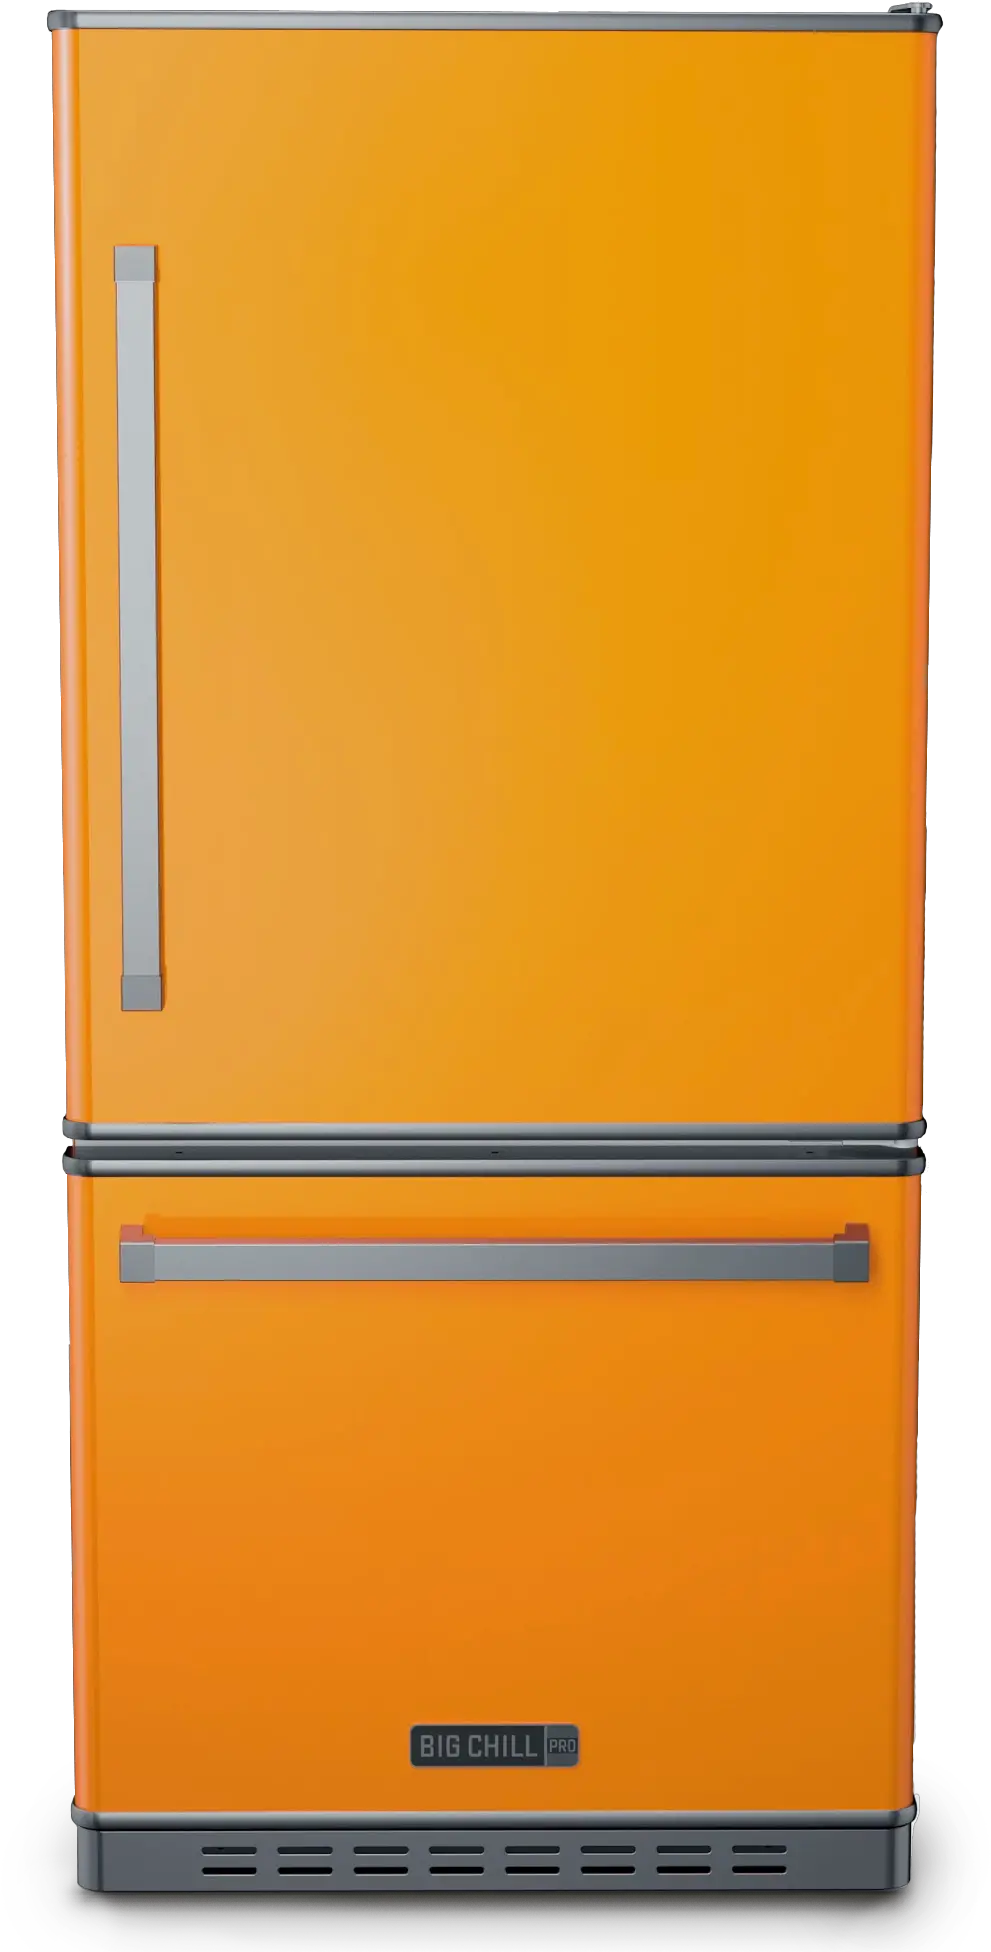 Download Refrigerator Png Image For Free Yellow Fridge Cartoon Refrigerator Png